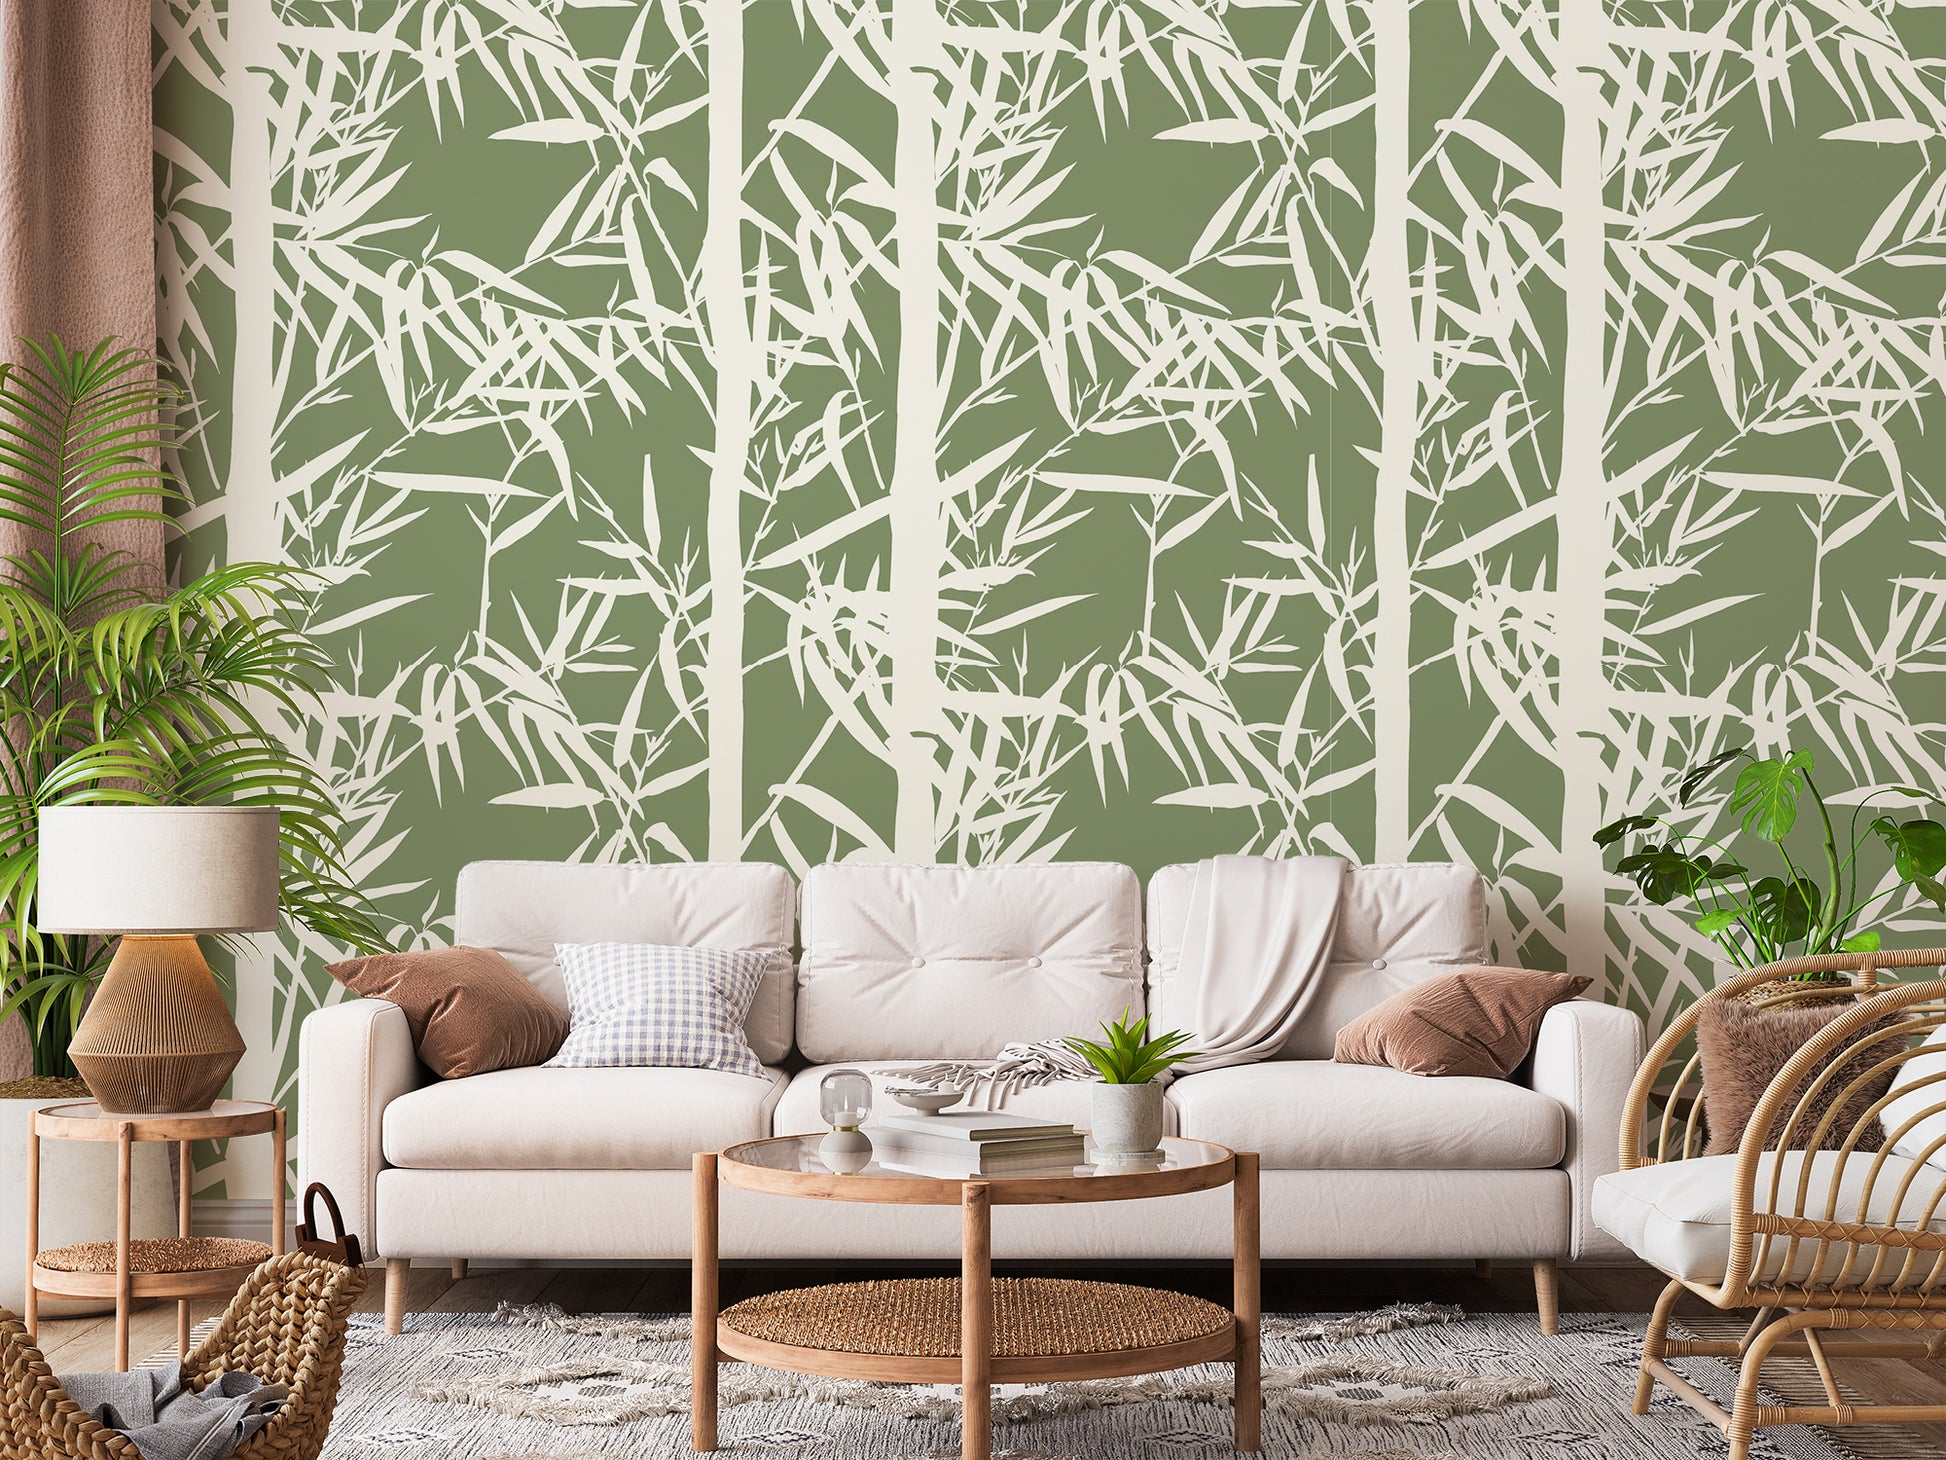 Jade Beige Sofa With Lots of Green Plants